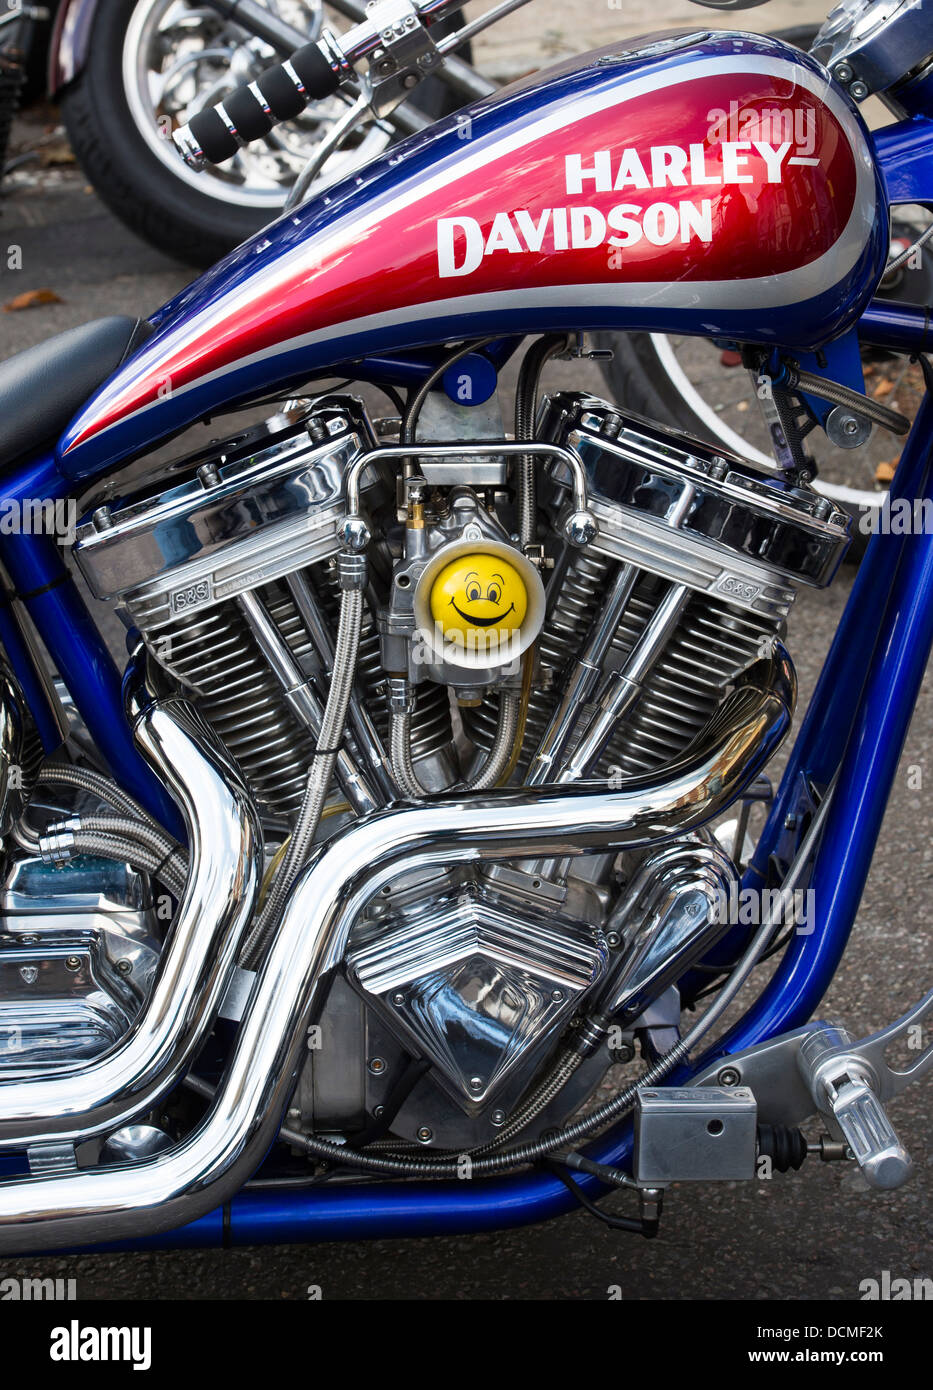 Custom chopper Harley Davidson motorcycle Stock Photo